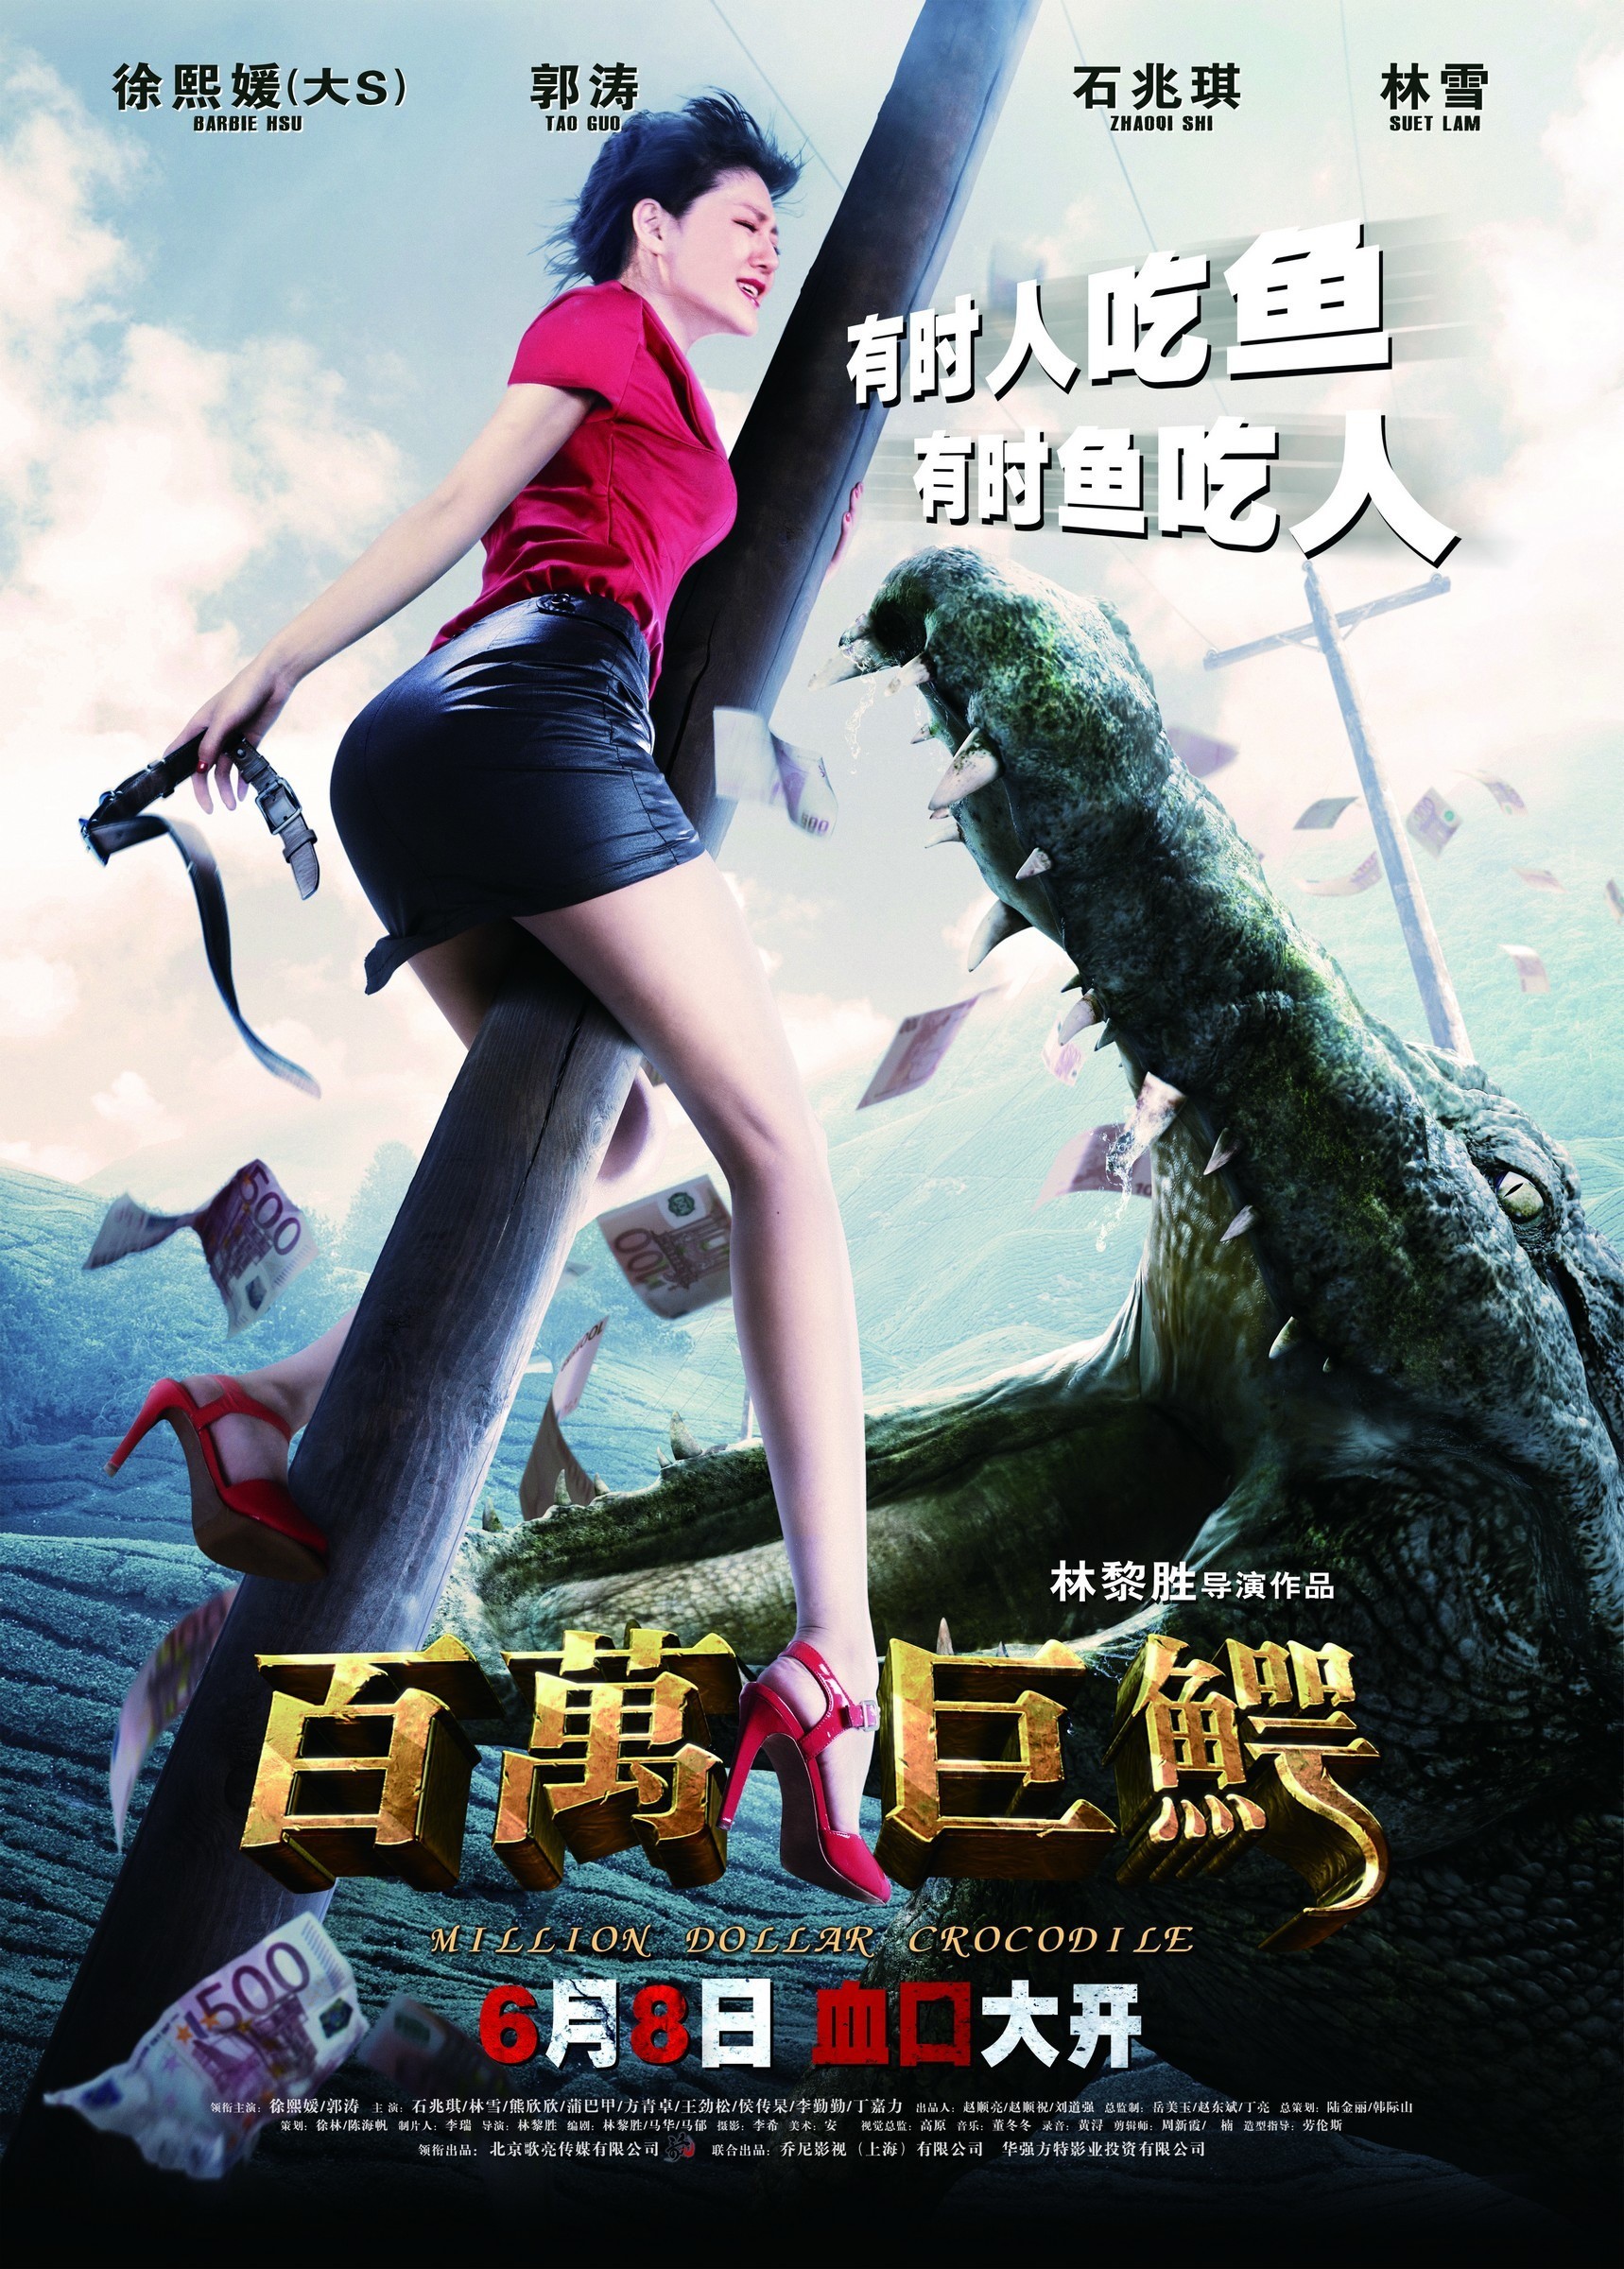 Mega Sized Movie Poster Image for Million Dollar Crocodile (#5 of 5)